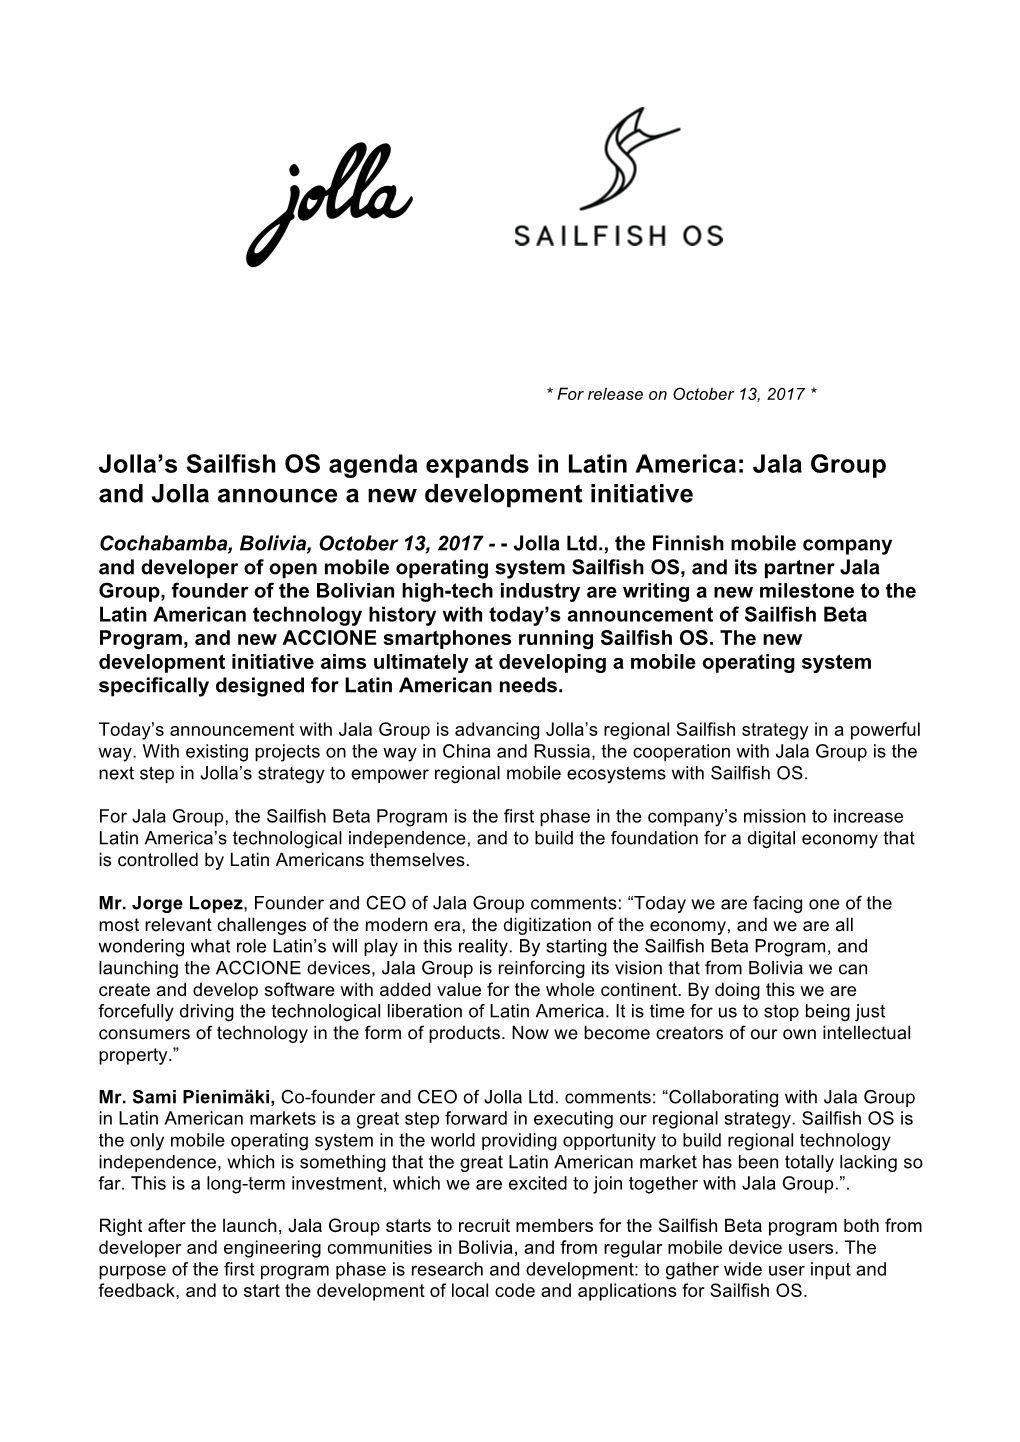 Jolla's Sailfish OS Agenda Expands in Latin America: Jala Group and Jolla